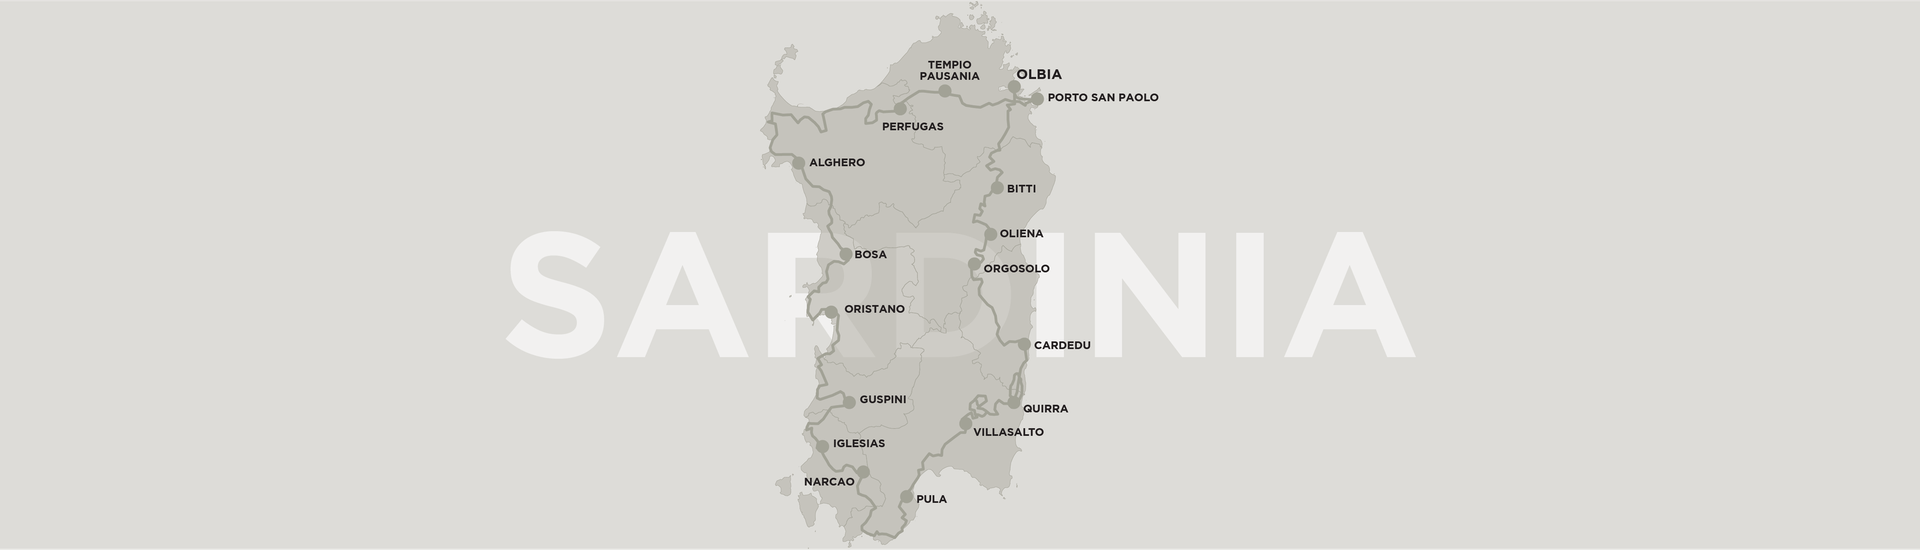 Dainese Sardinia route map